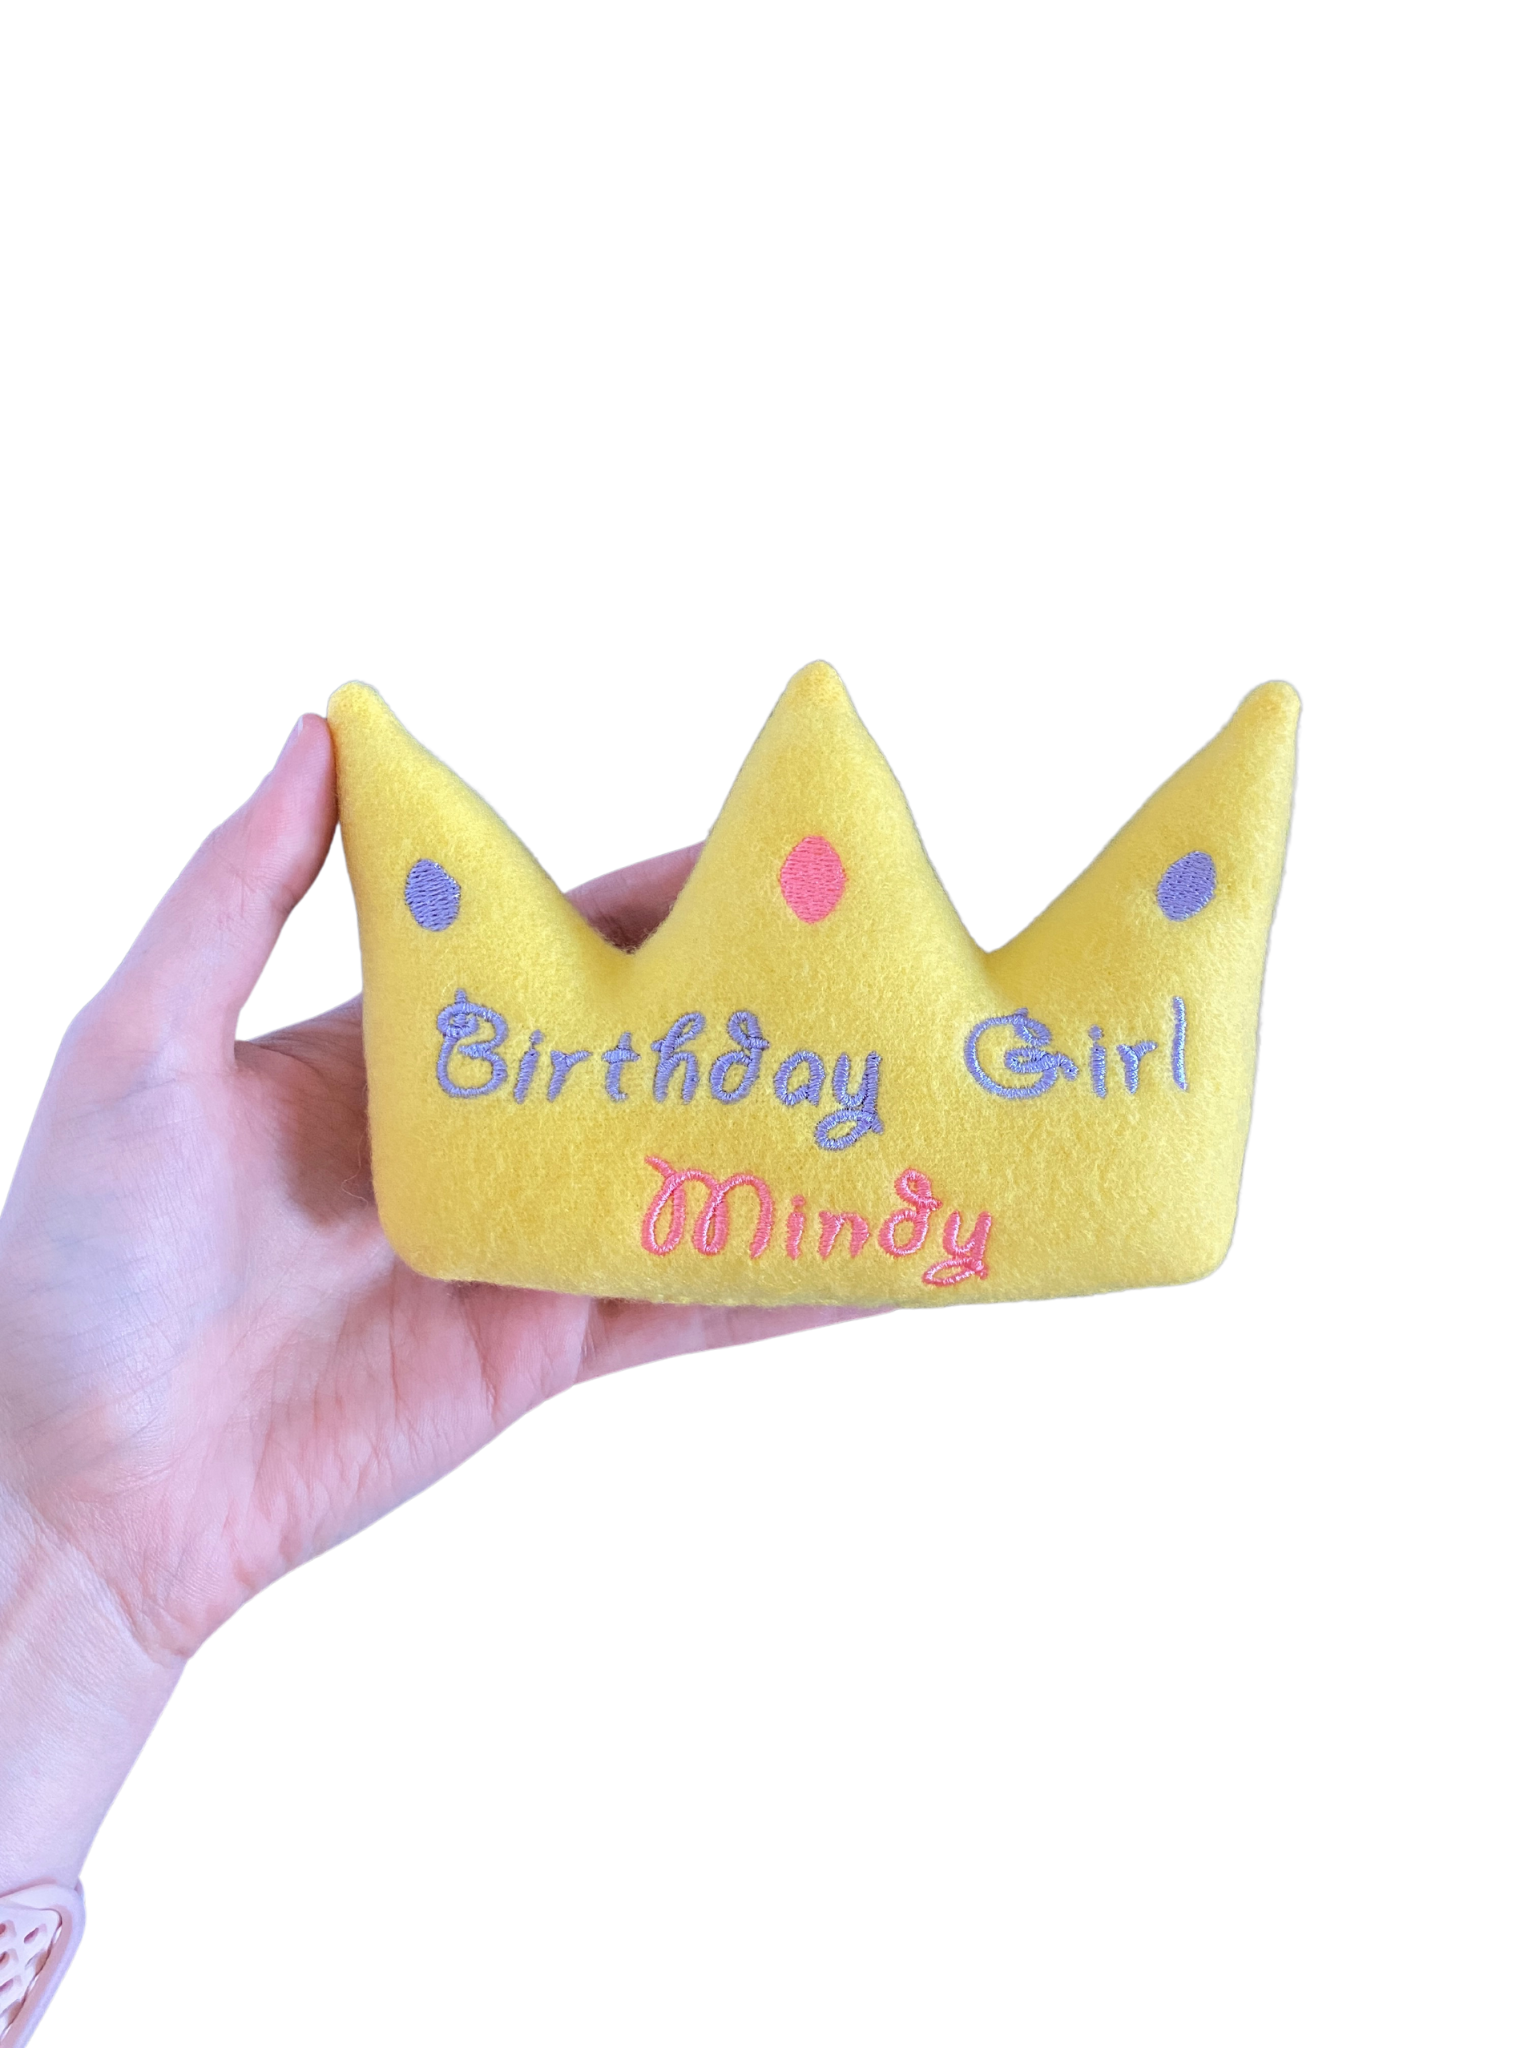 Birthday Crown Custom Dog Toy- Personalized Gotcha Day Squeaky Toy Dog Toys Pink and Purple Birthday Boy ____ 